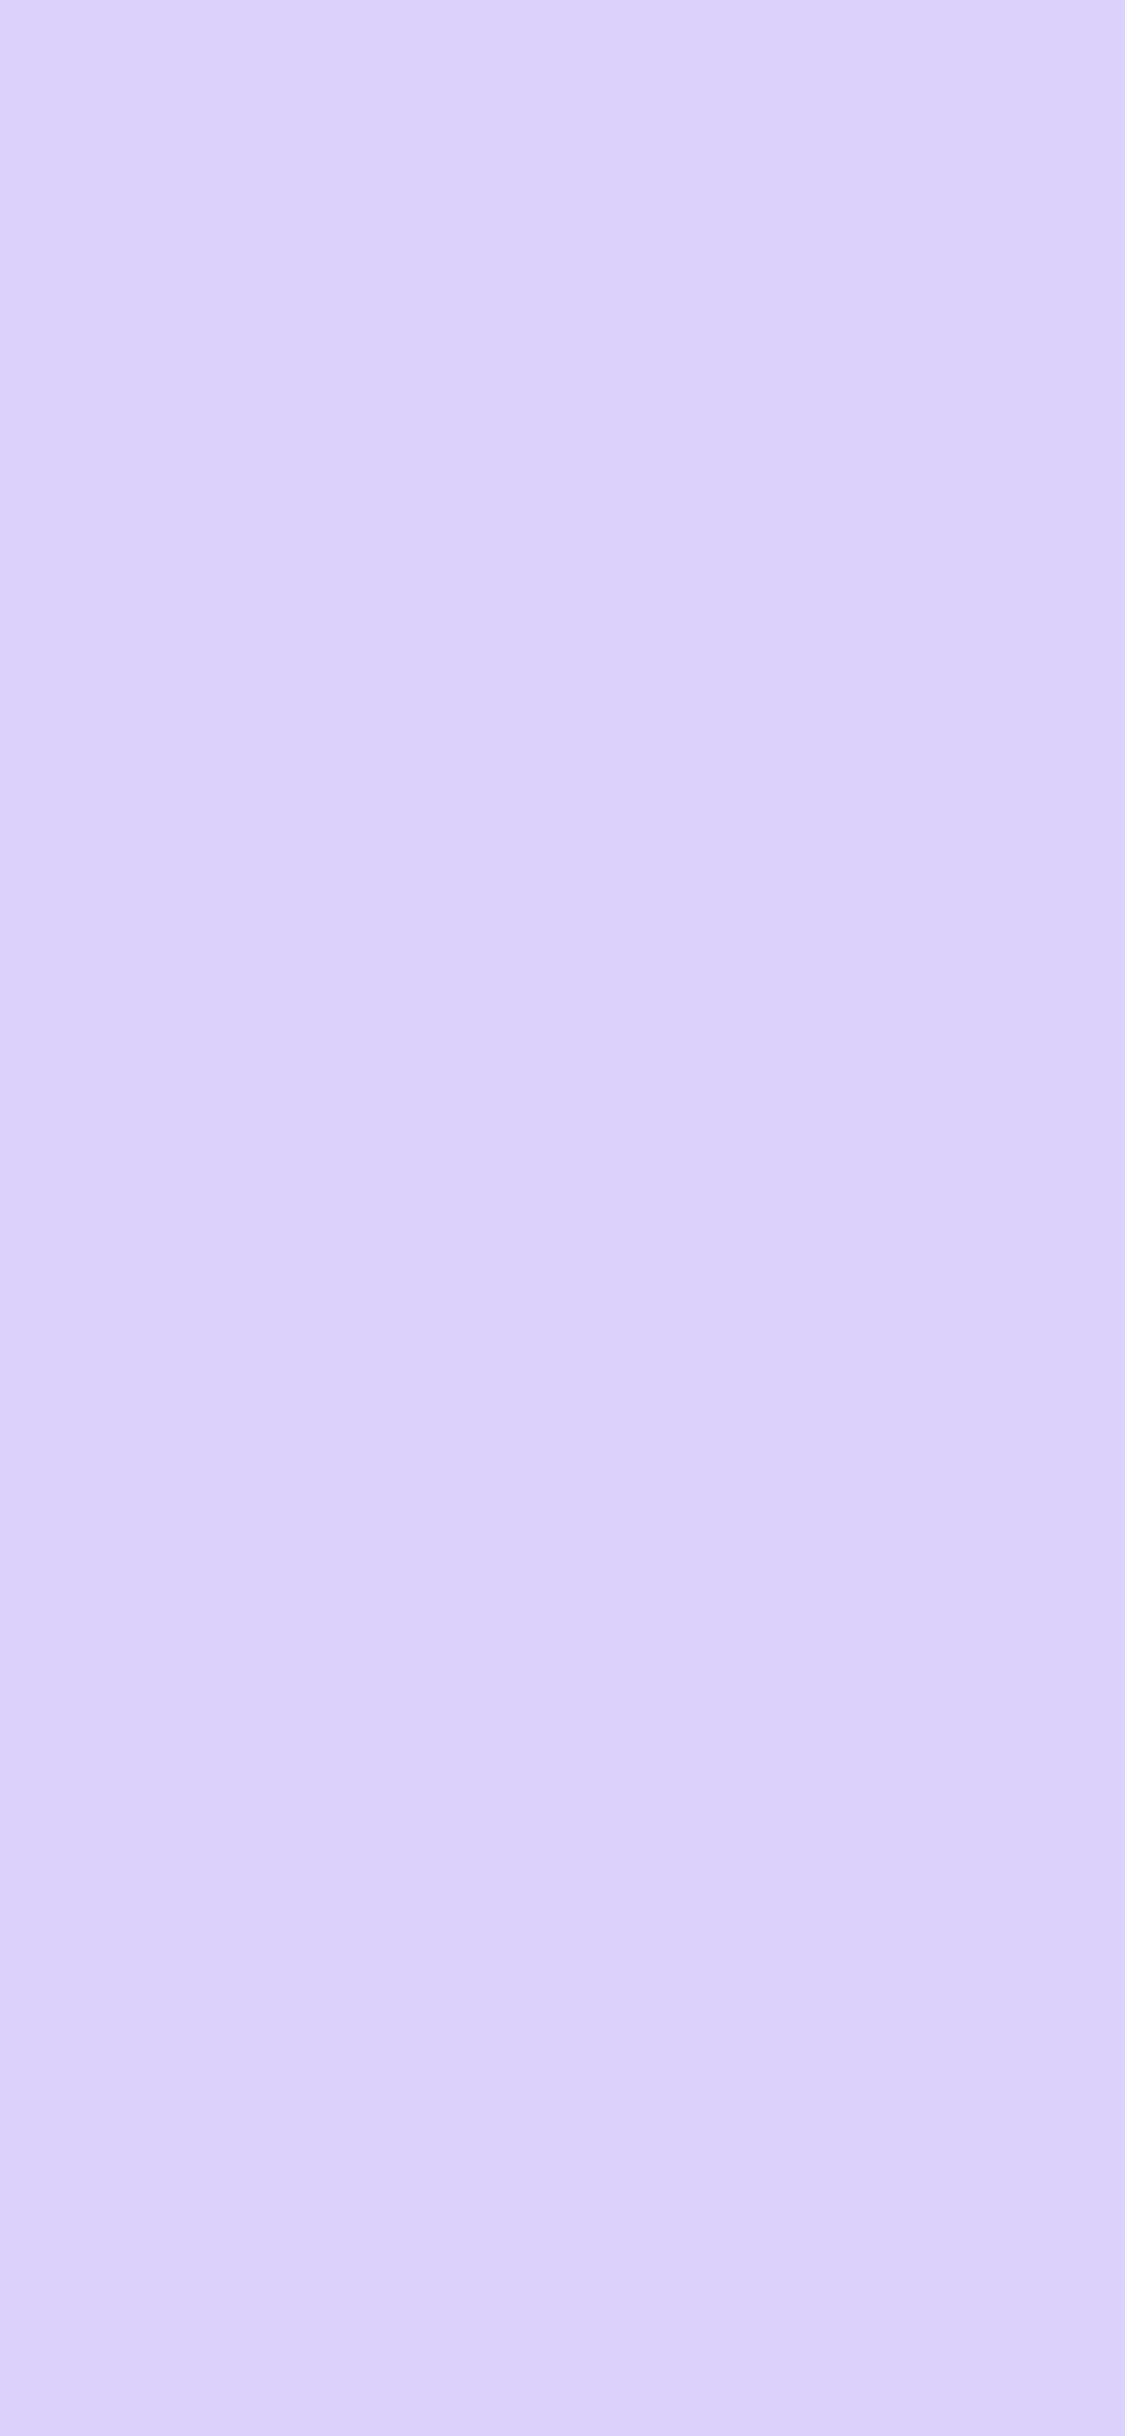 1125x2436 Pale Lavender Solid Color Background